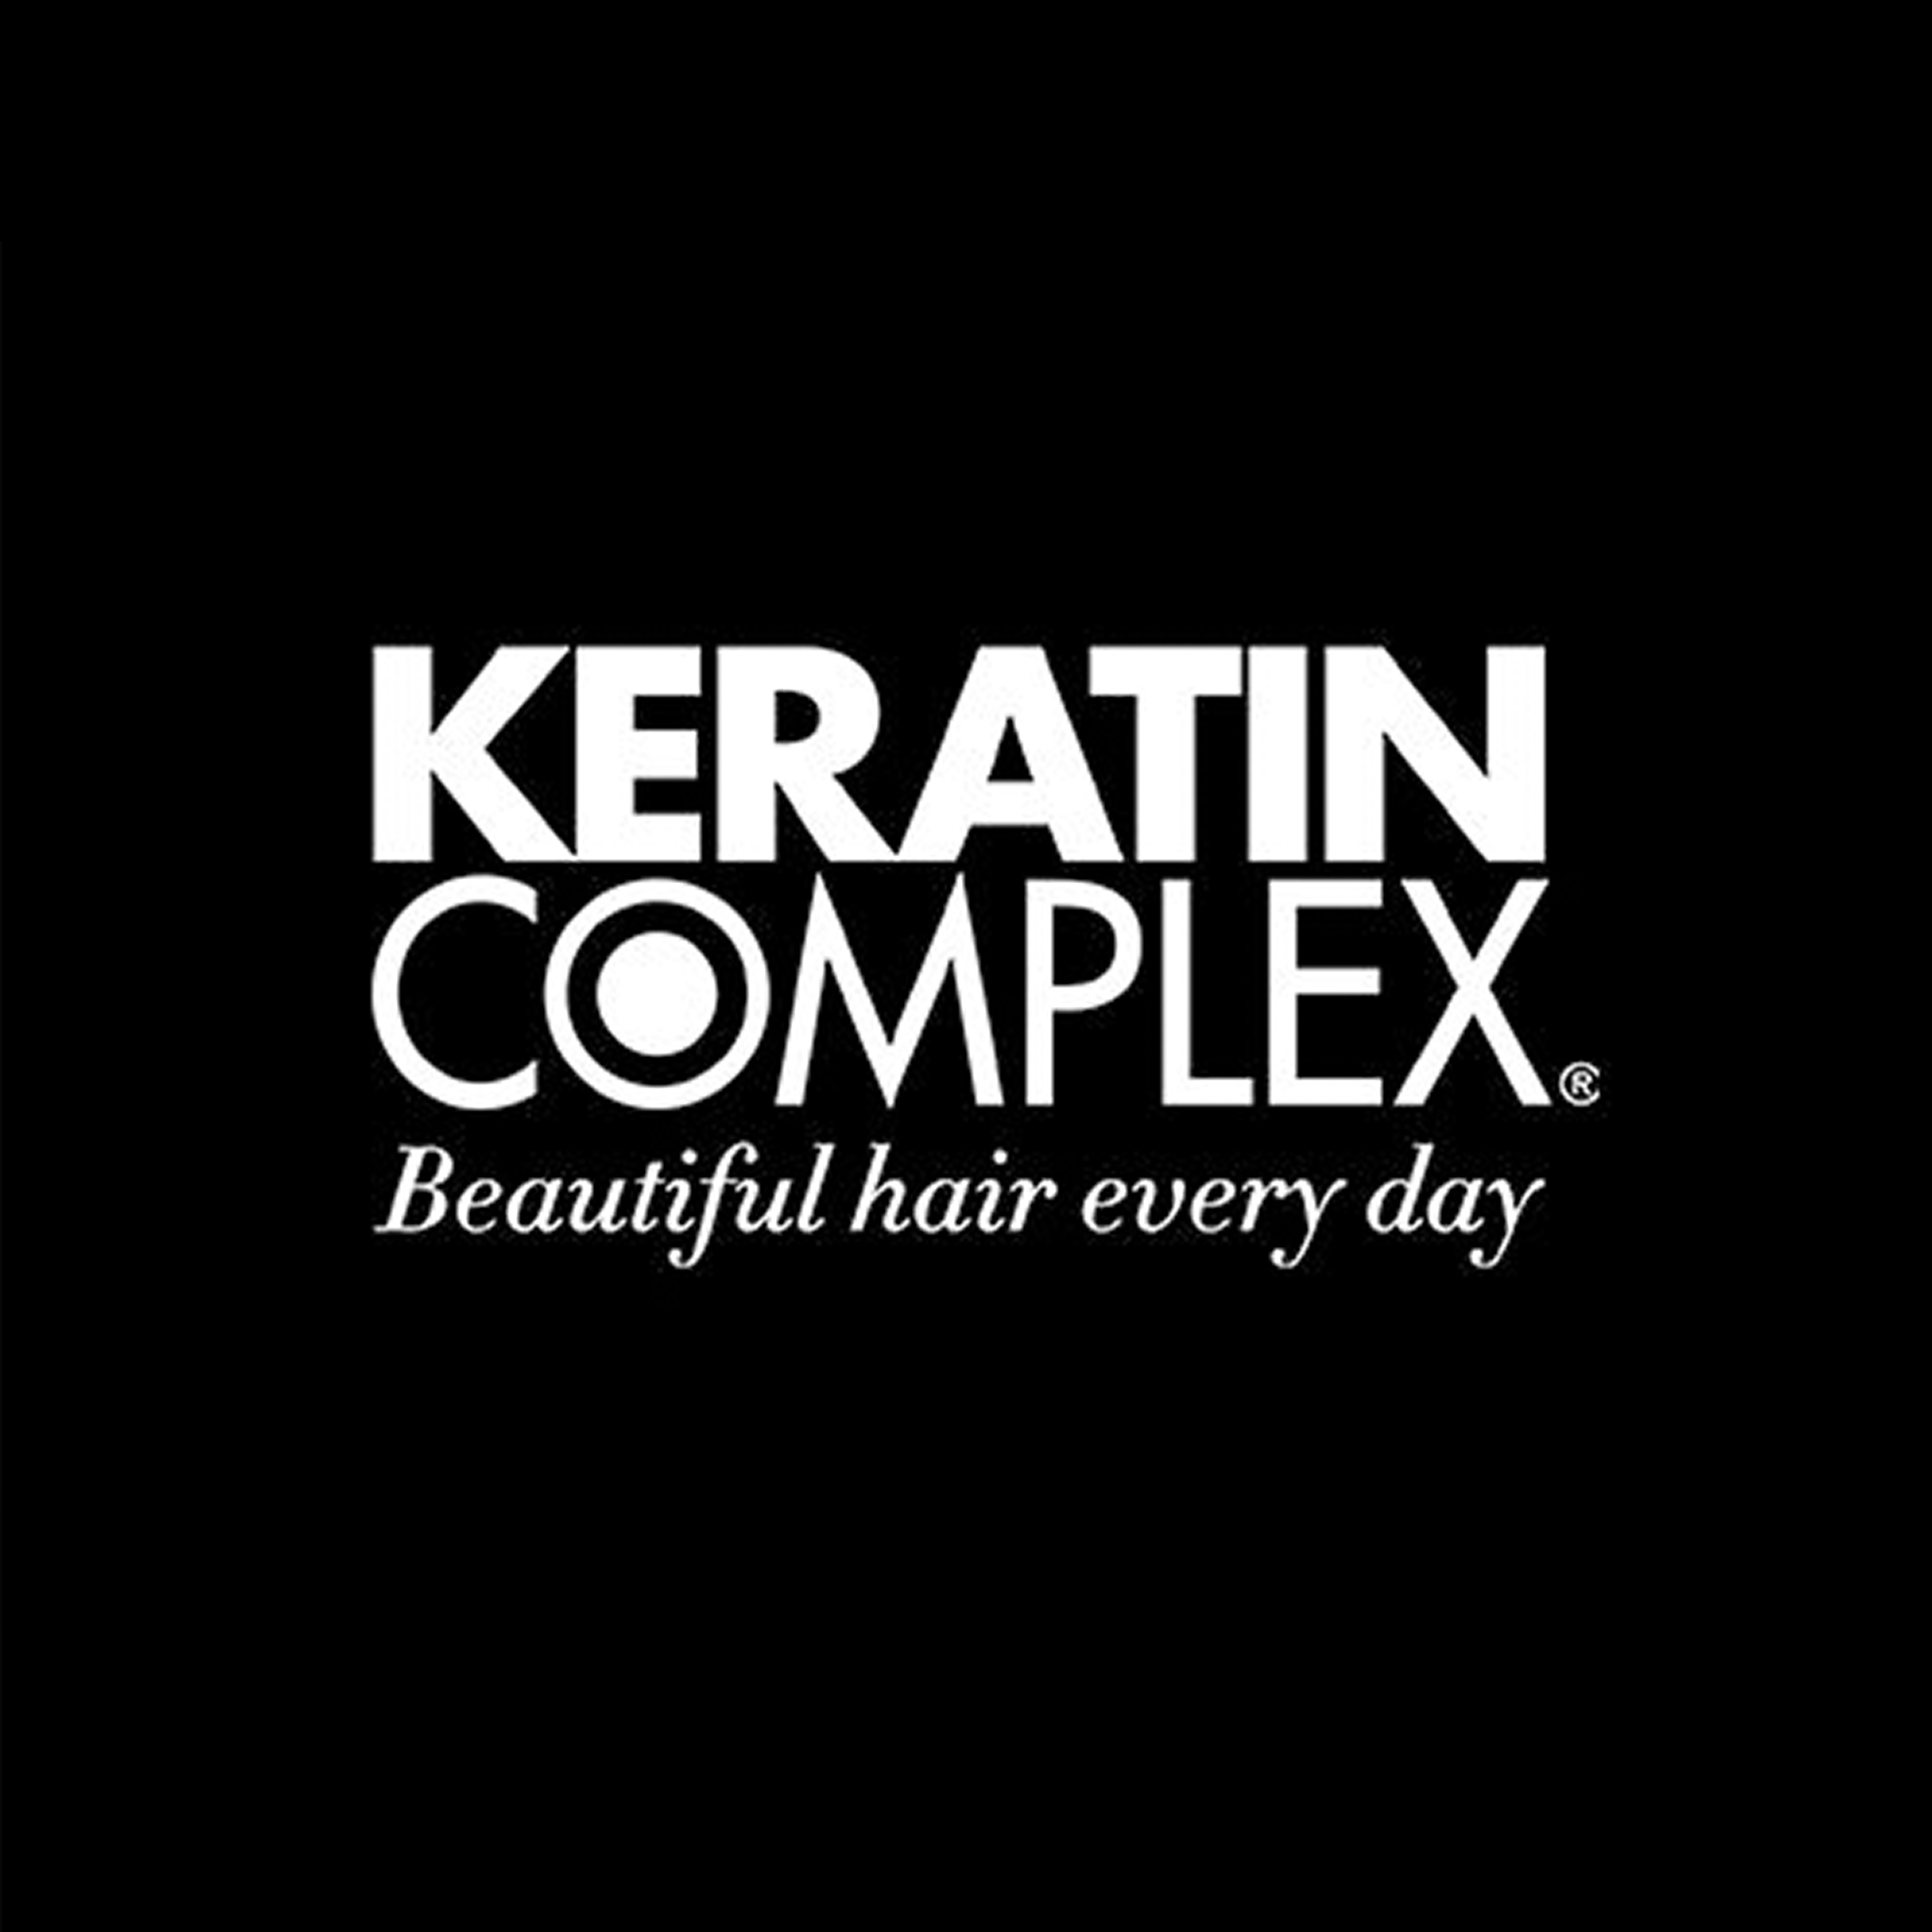 Logos – Keratin Complex